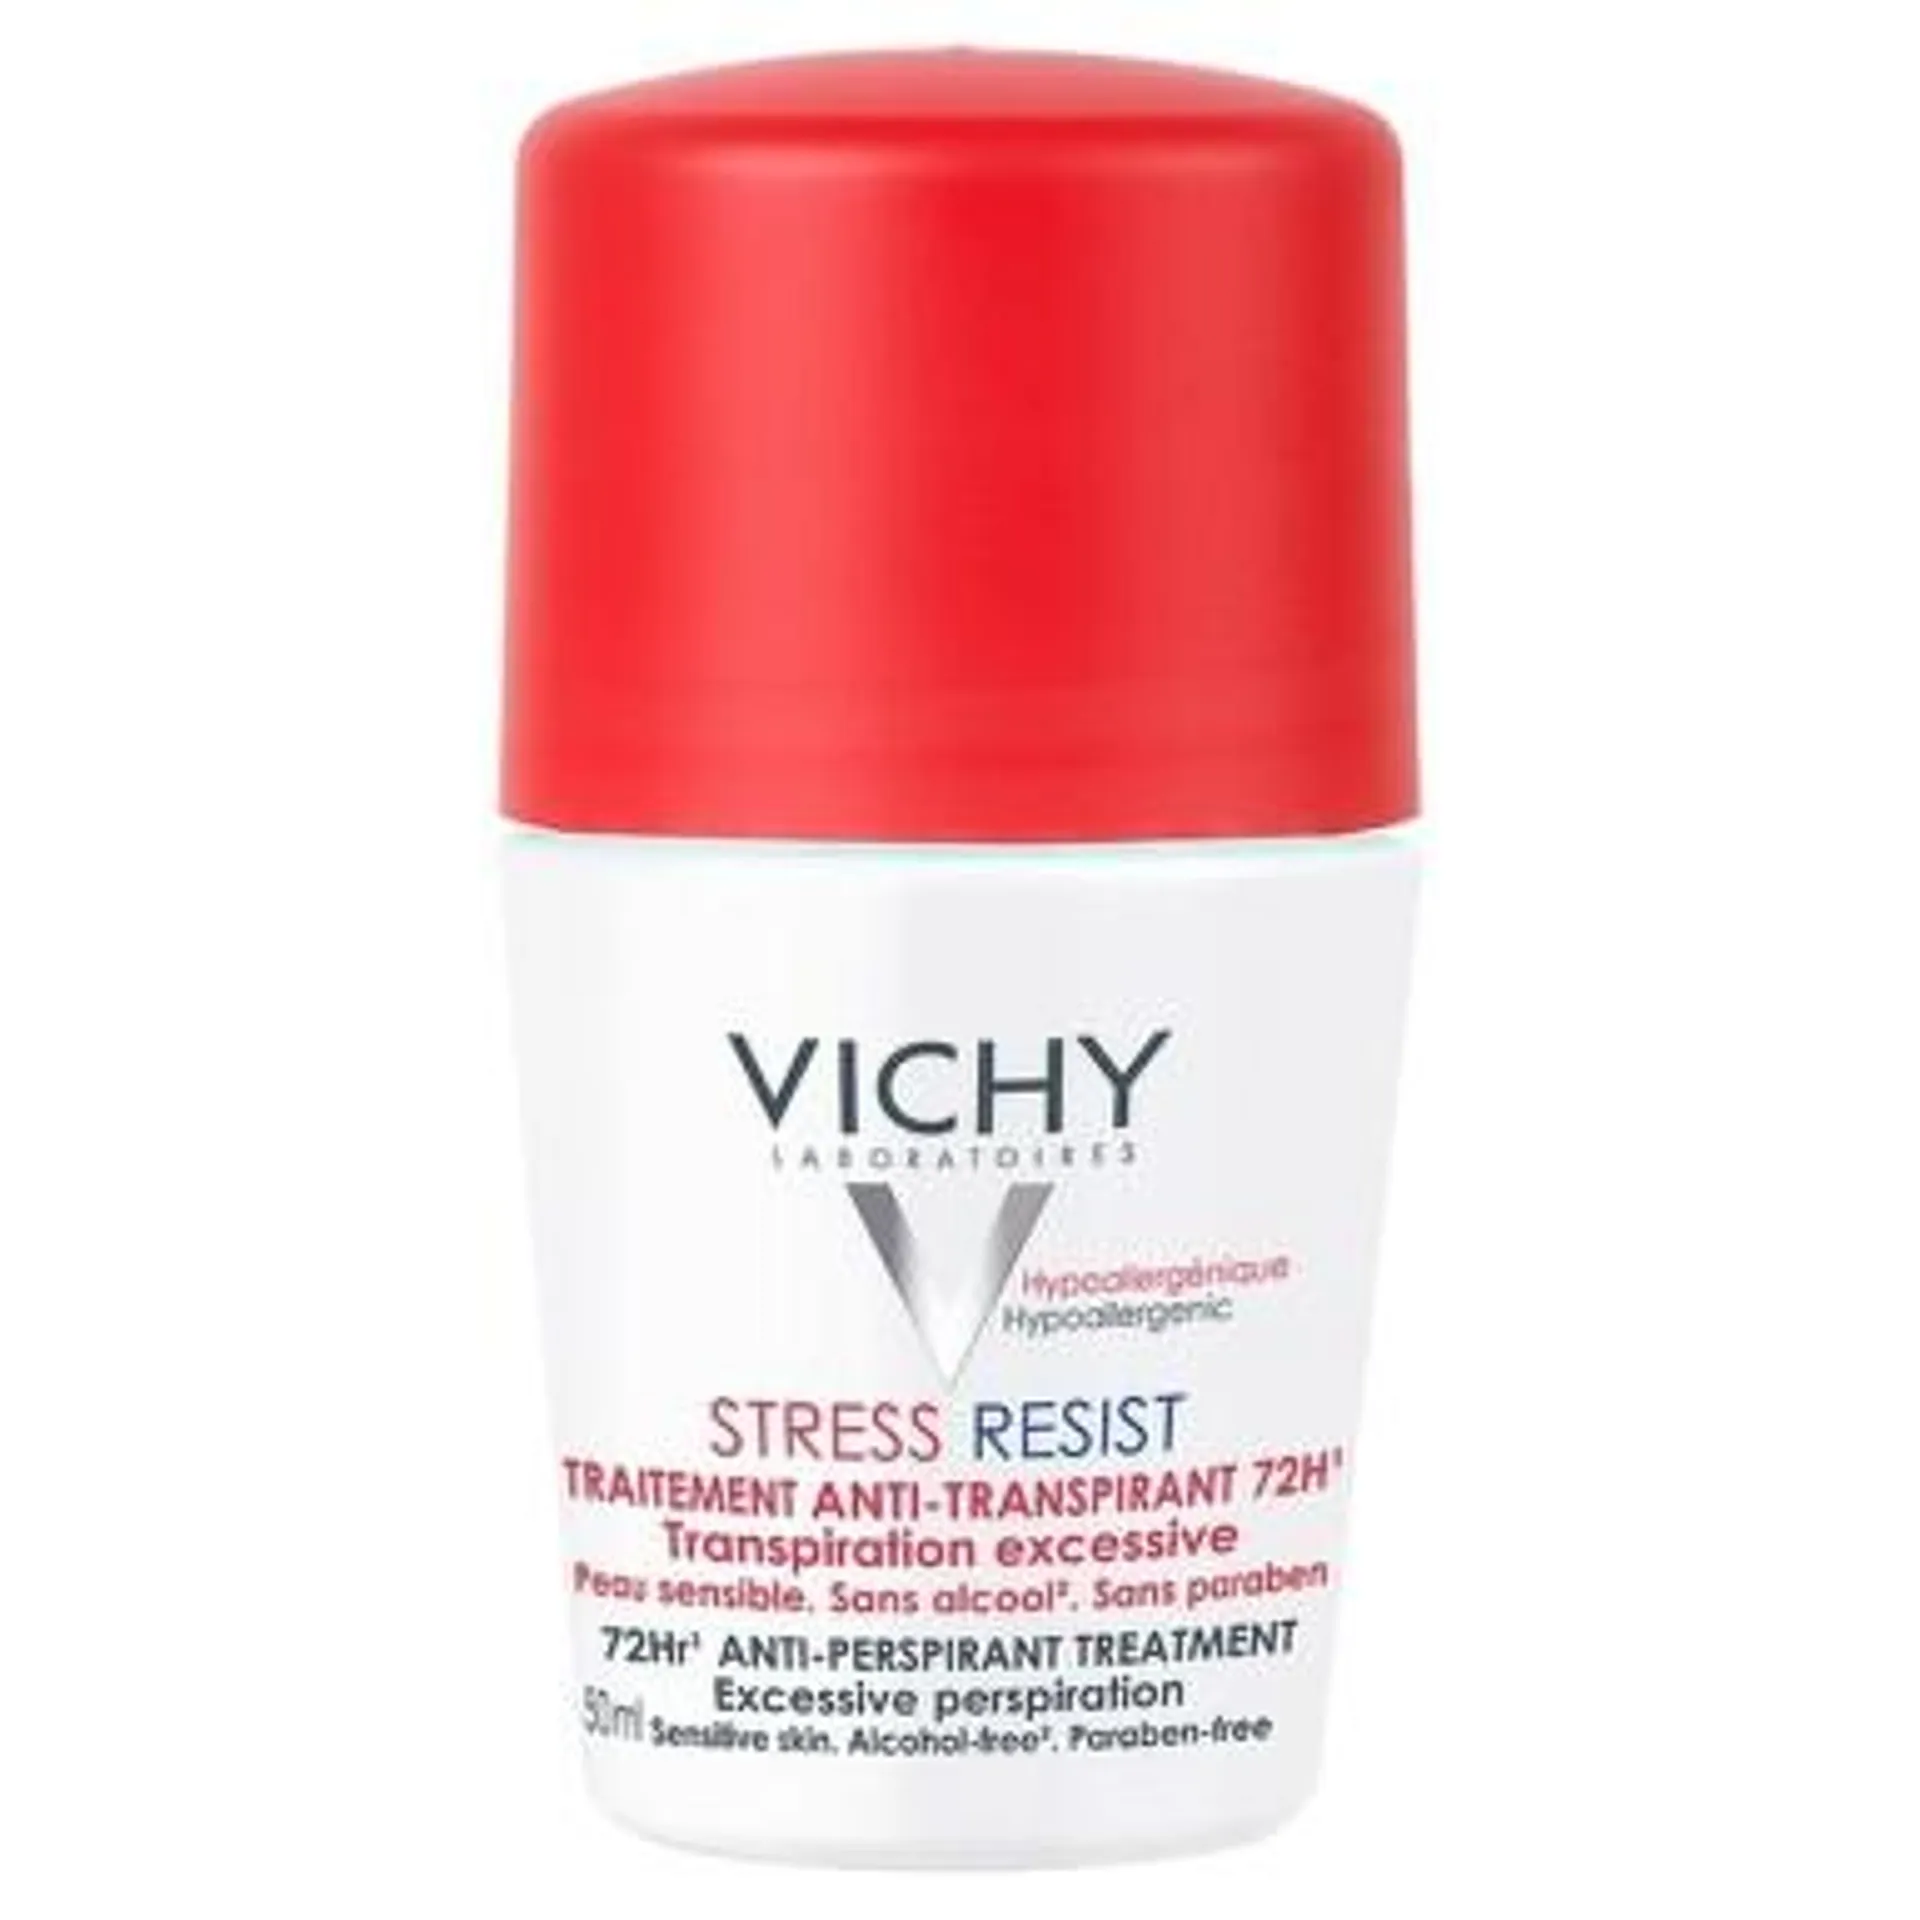 VICHY Dezodorant stress resist 50 ml - 2+1